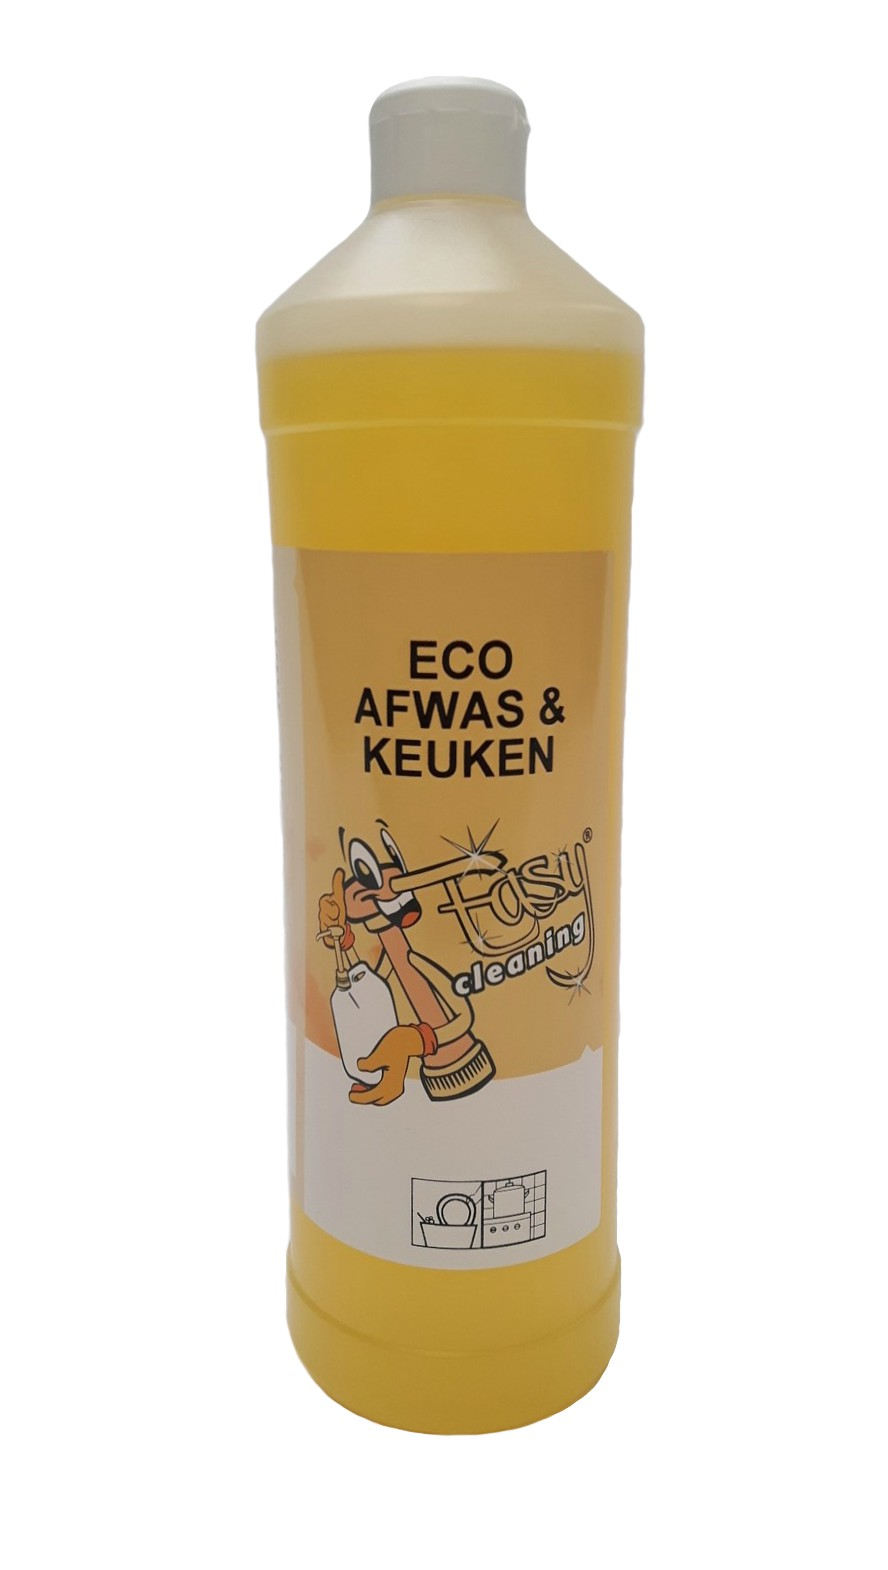 Easy Cleaning ECO Afwas & keuken 1 liter